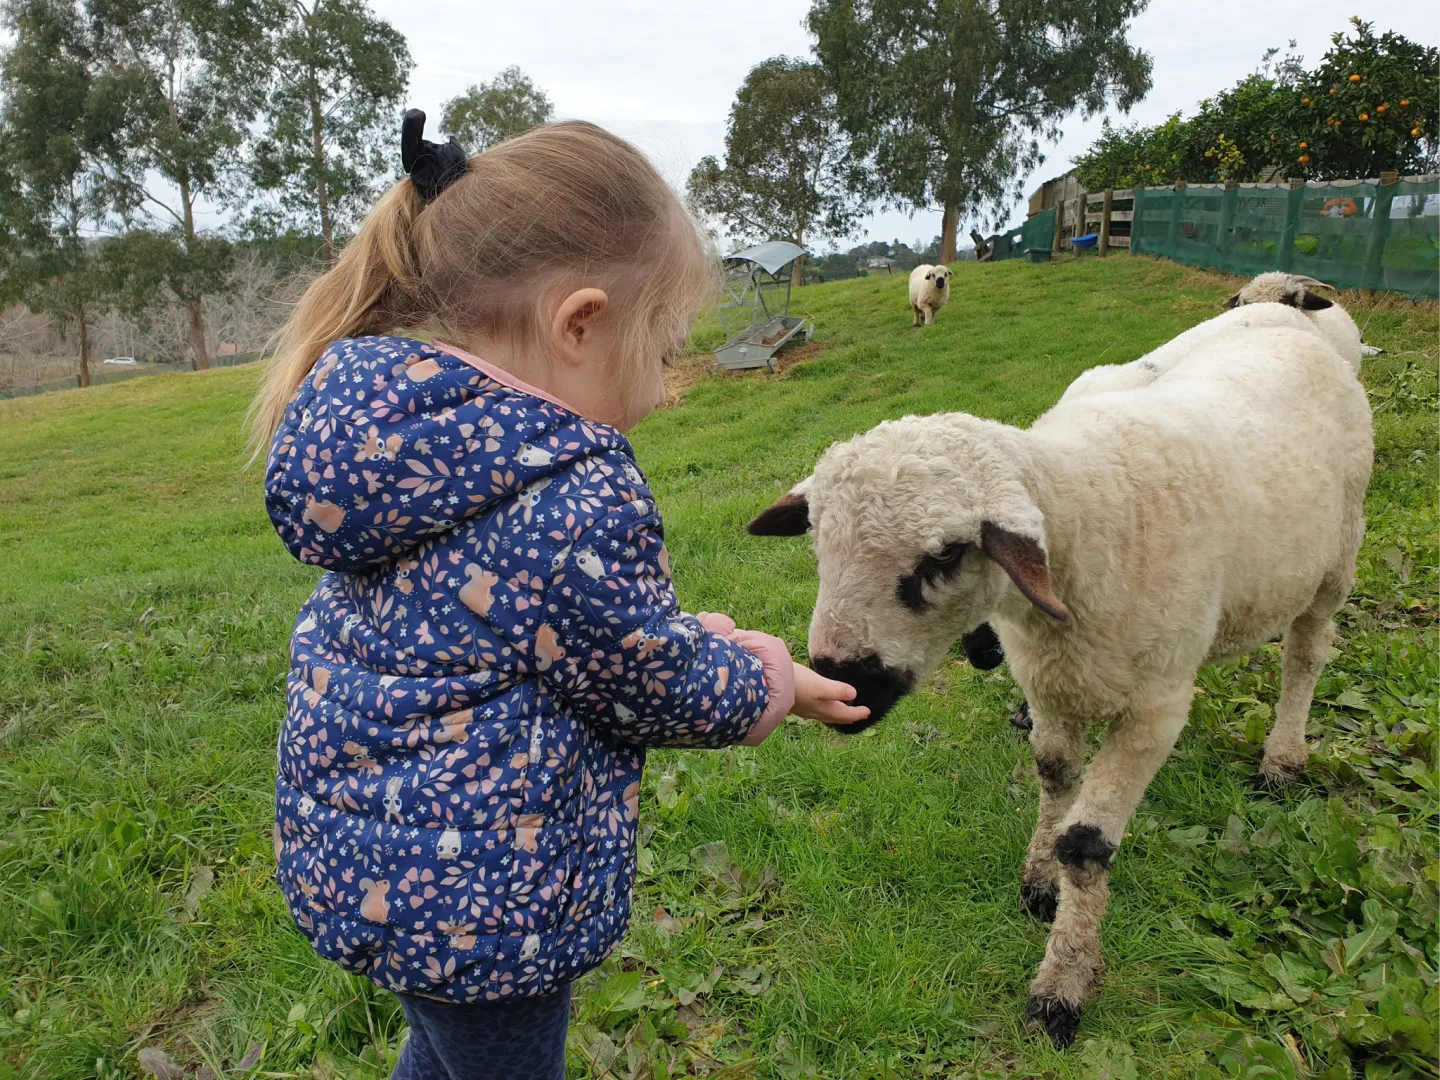 Child feeding a sheep outdoors